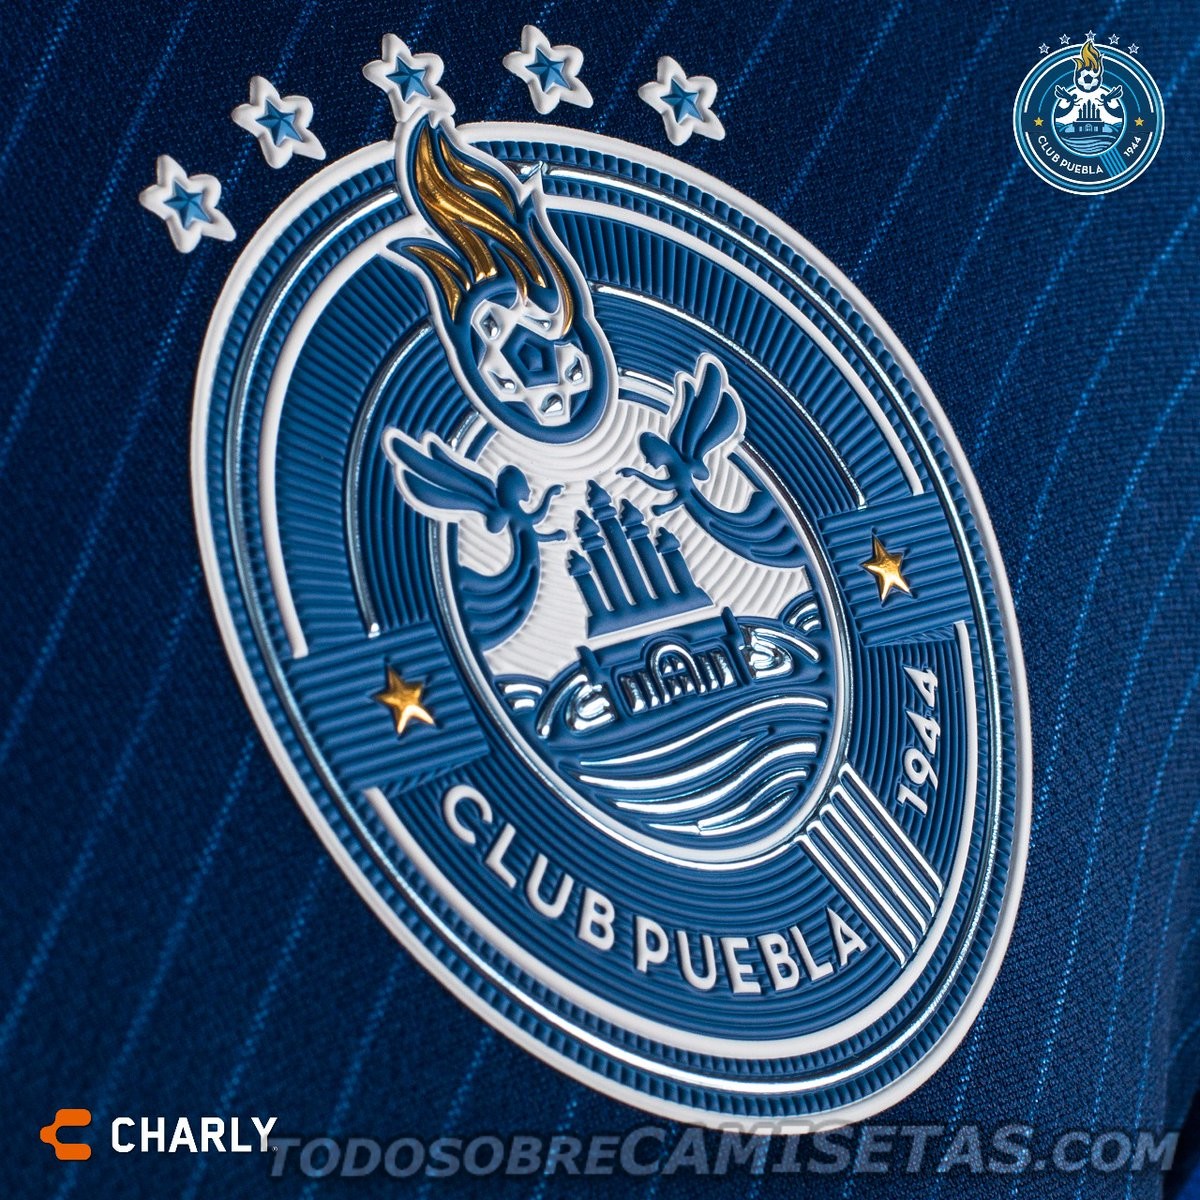 Uniformes Charly Futbol Club Puebla 2017-18 